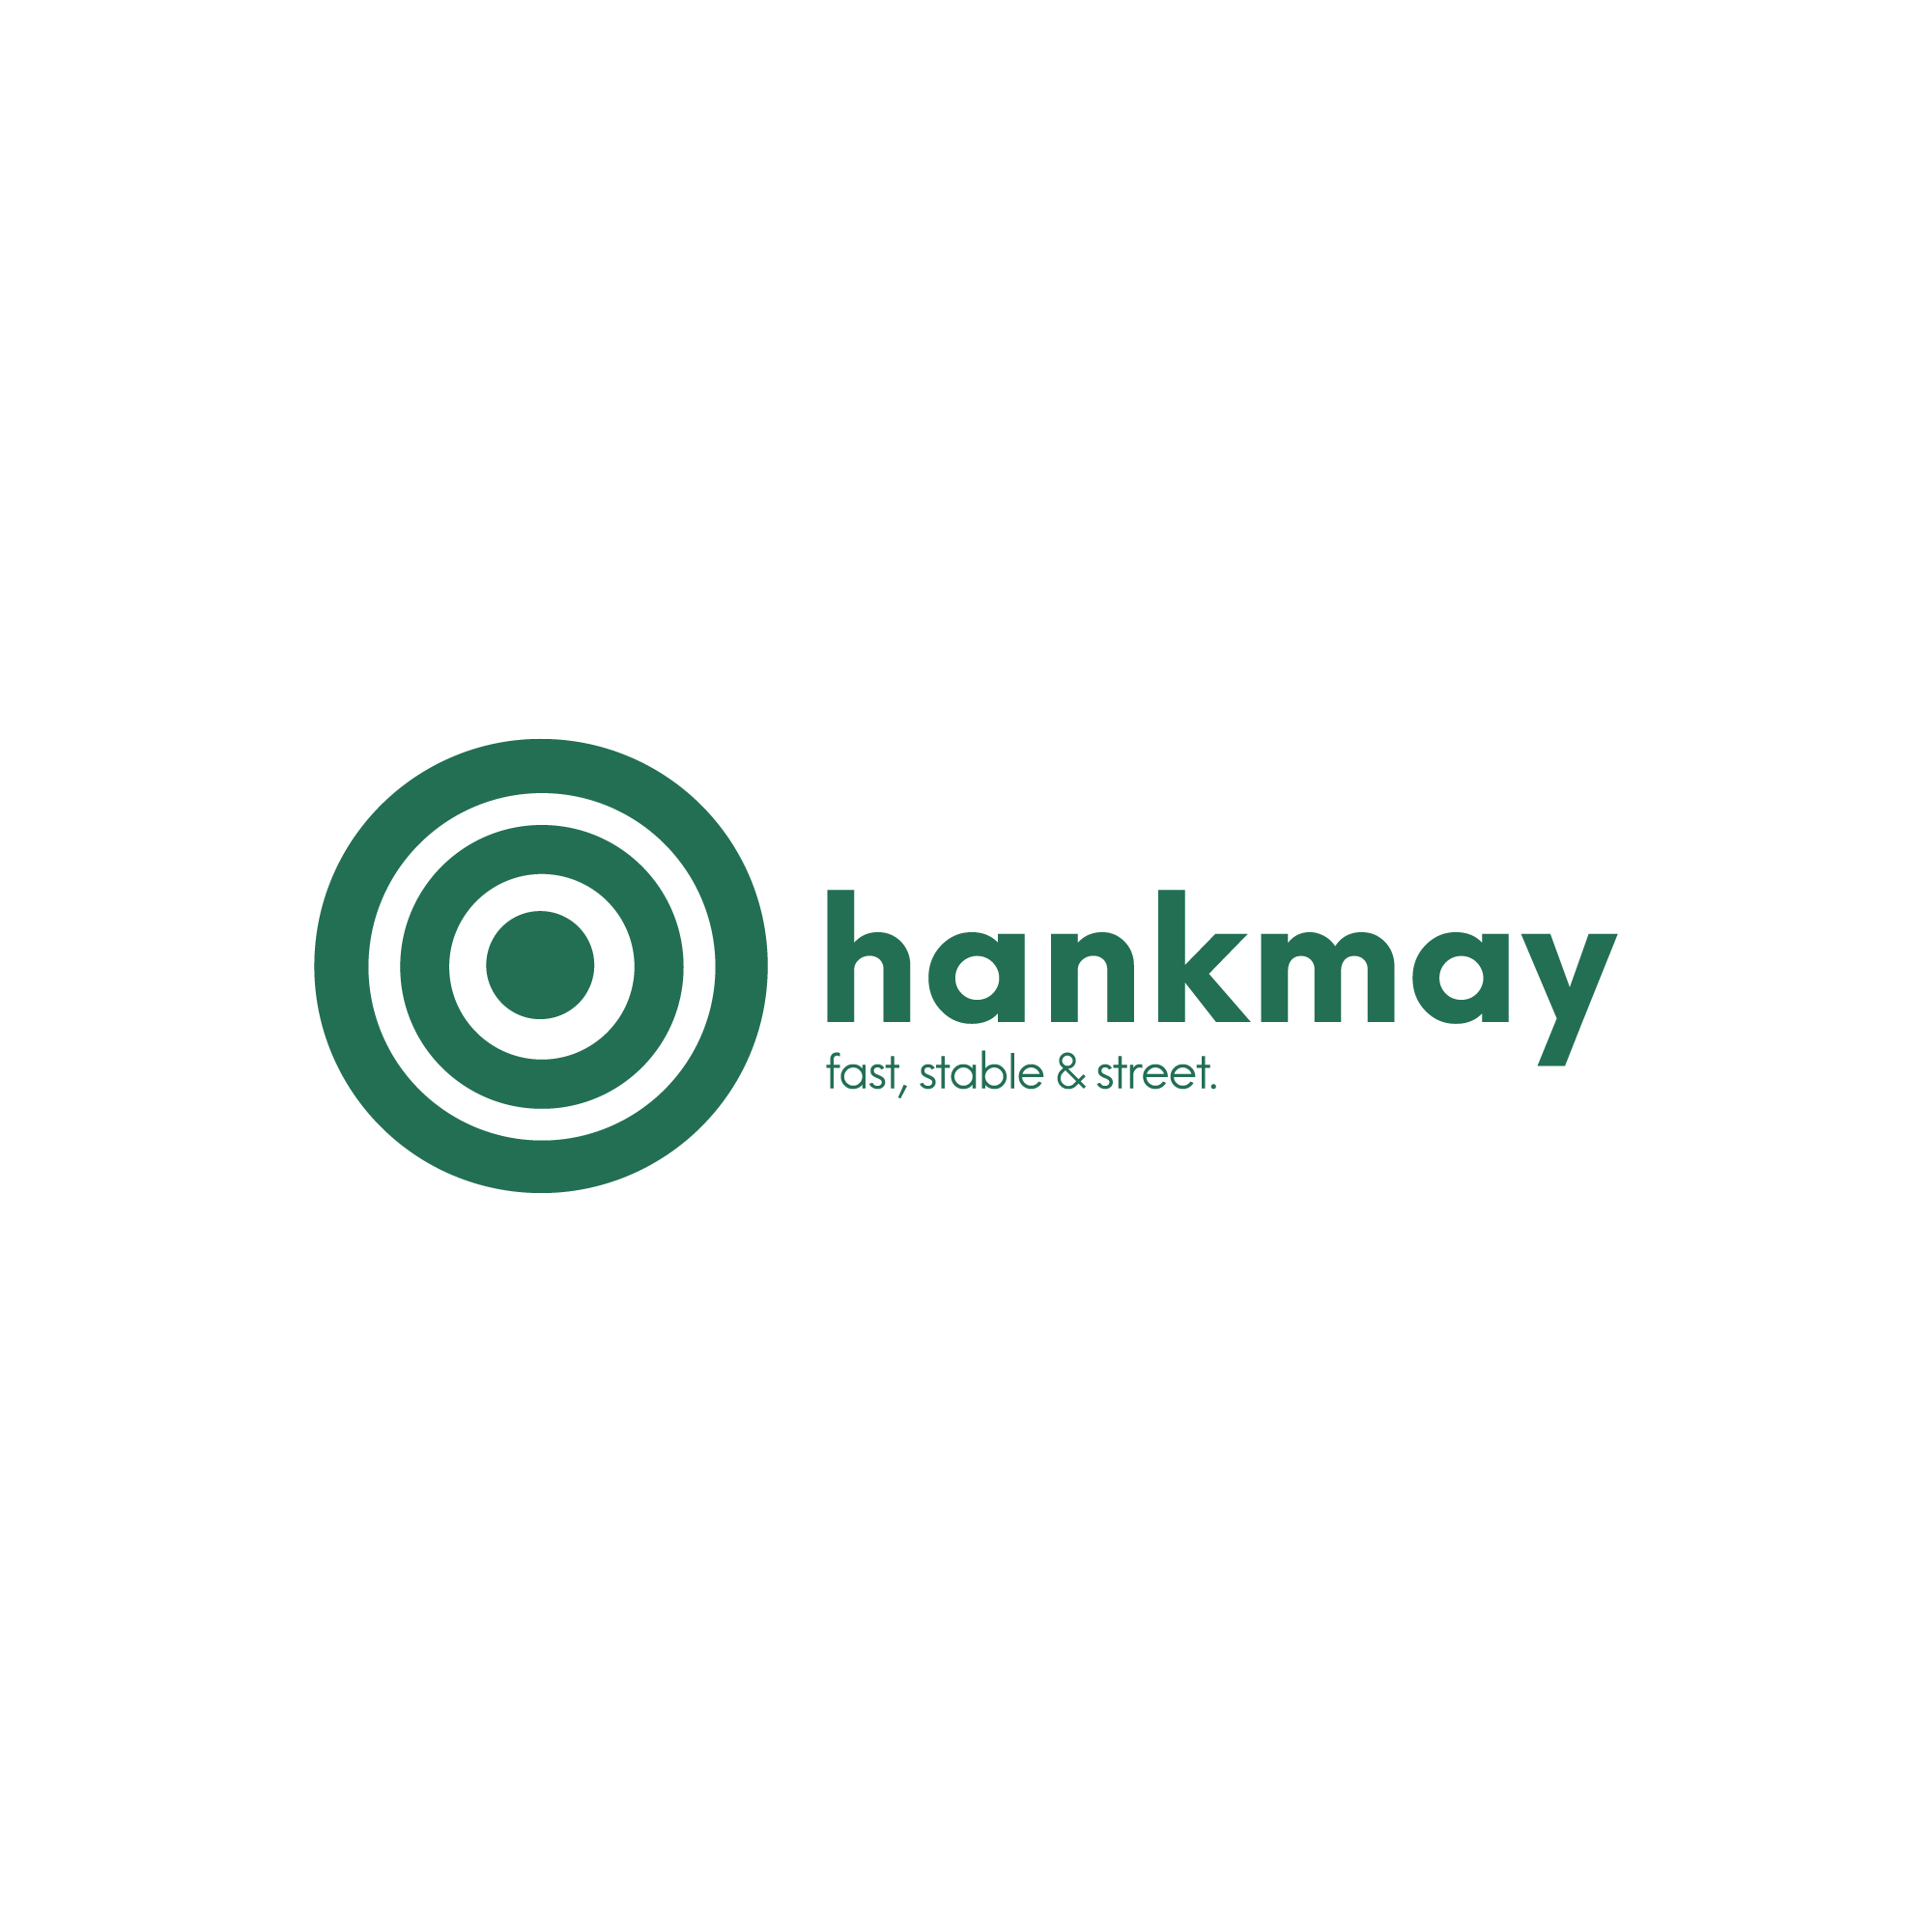 Hankmay